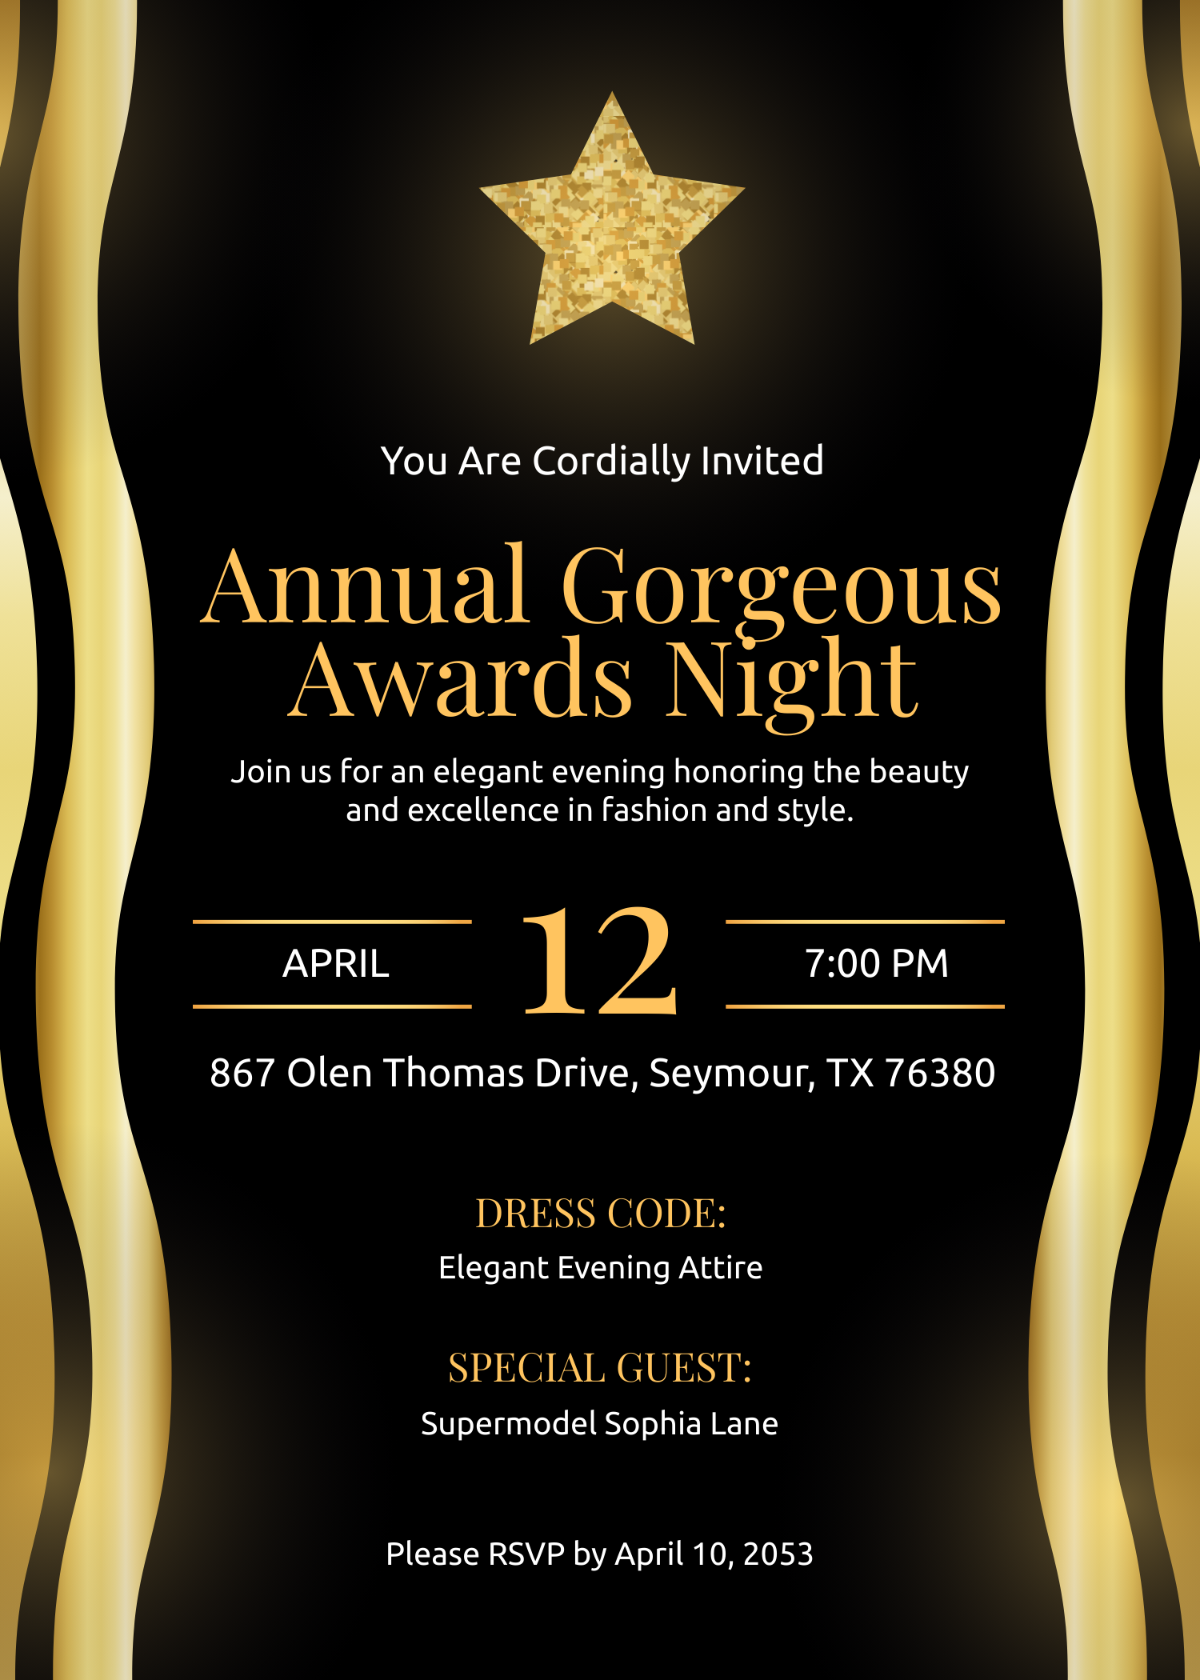 Gorgeous Awards Night Invitation